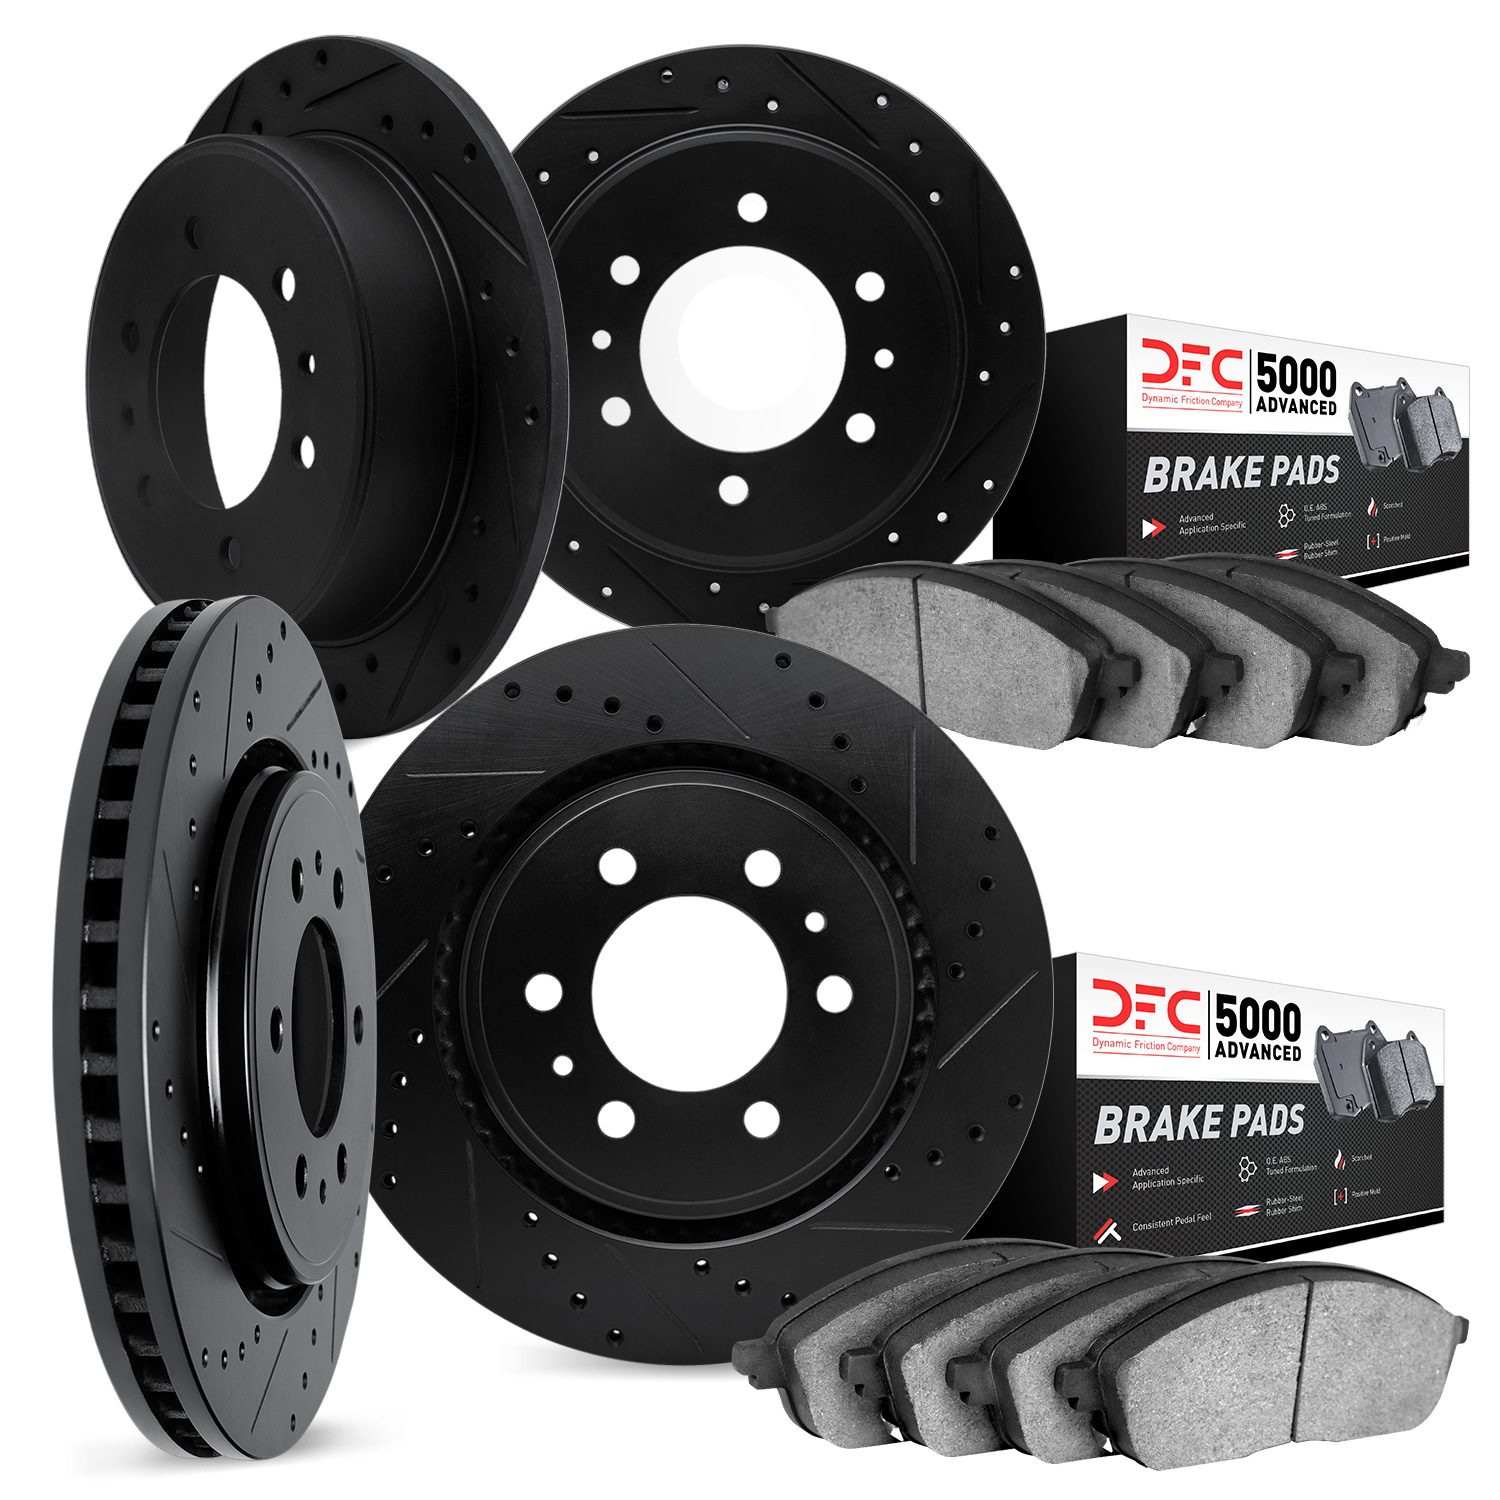 7504-40234 Drilled/Slotted Brake Rotors w/5000 Advanced Brake Pads Kit [Silver], Fits Select Multiple Makes/Models, Position: Fr